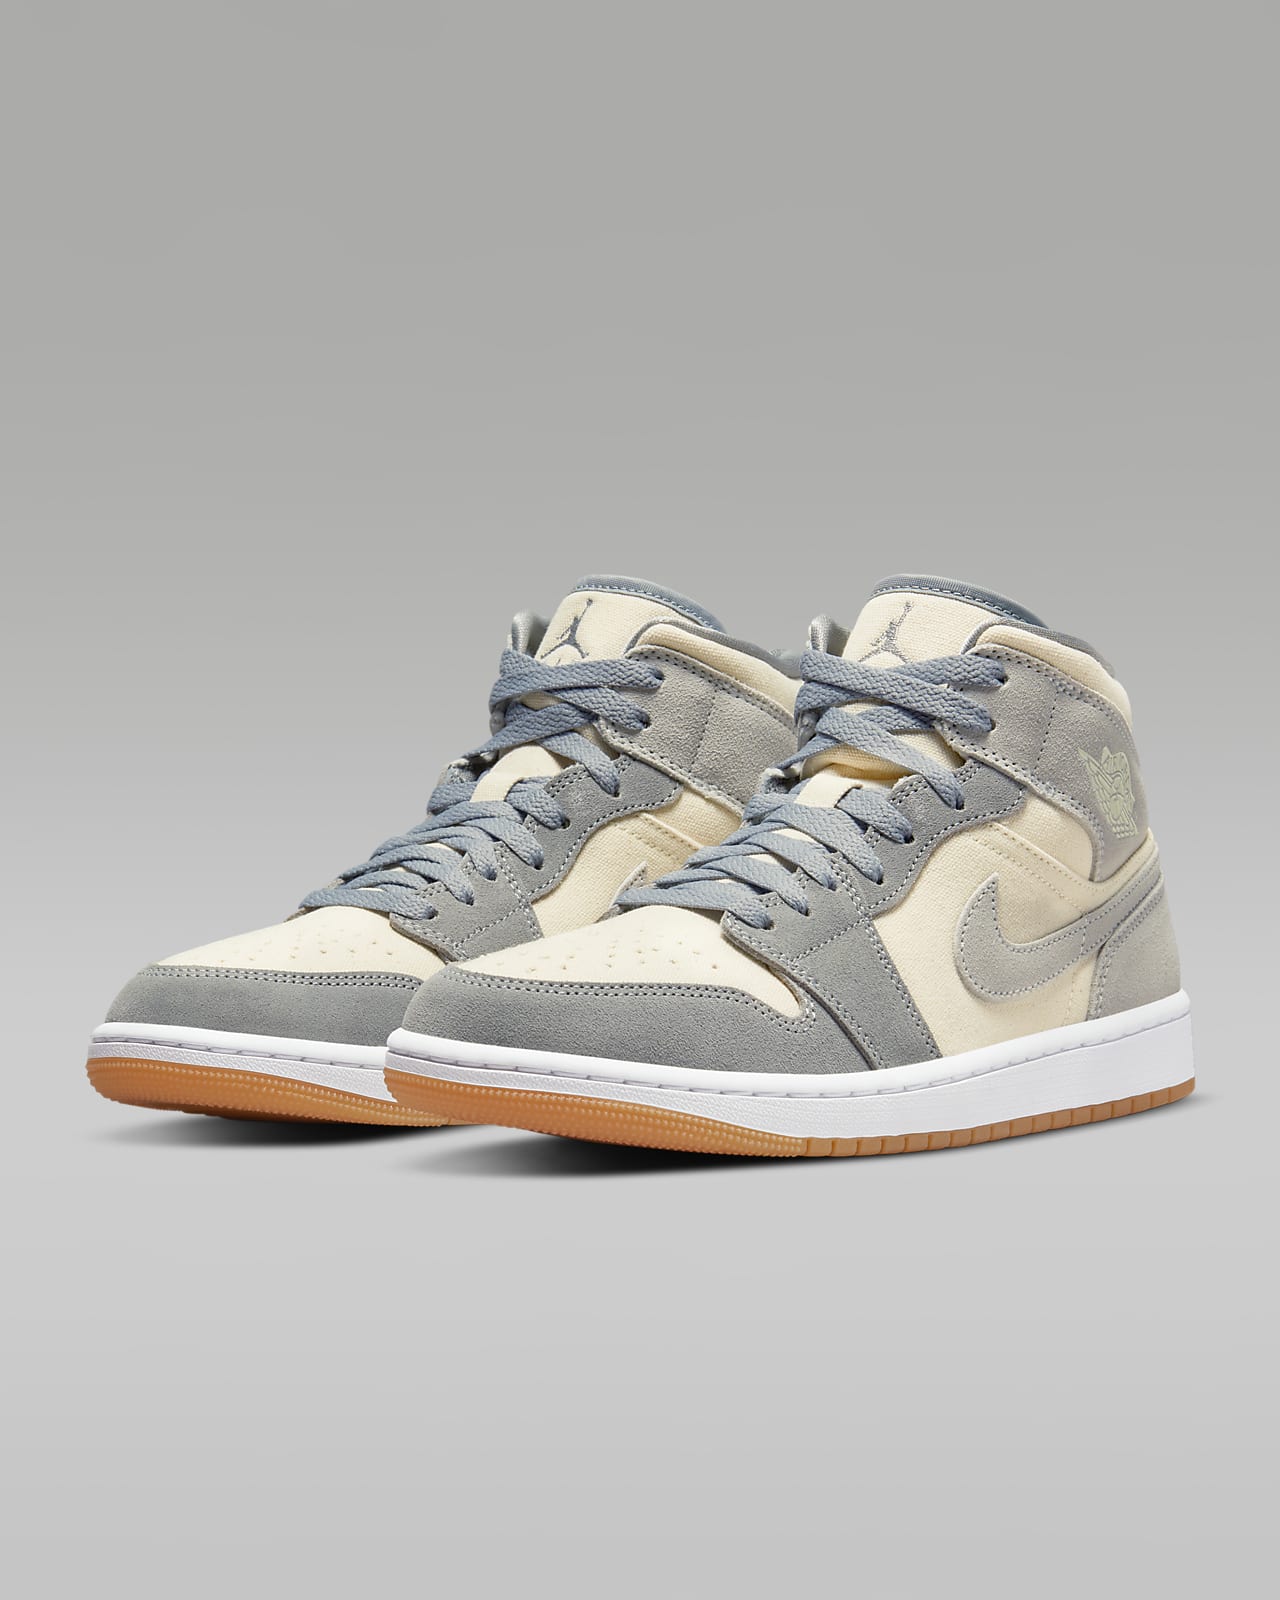 Air Jordan 1 Mid Men's Shoe Size 11 (White)